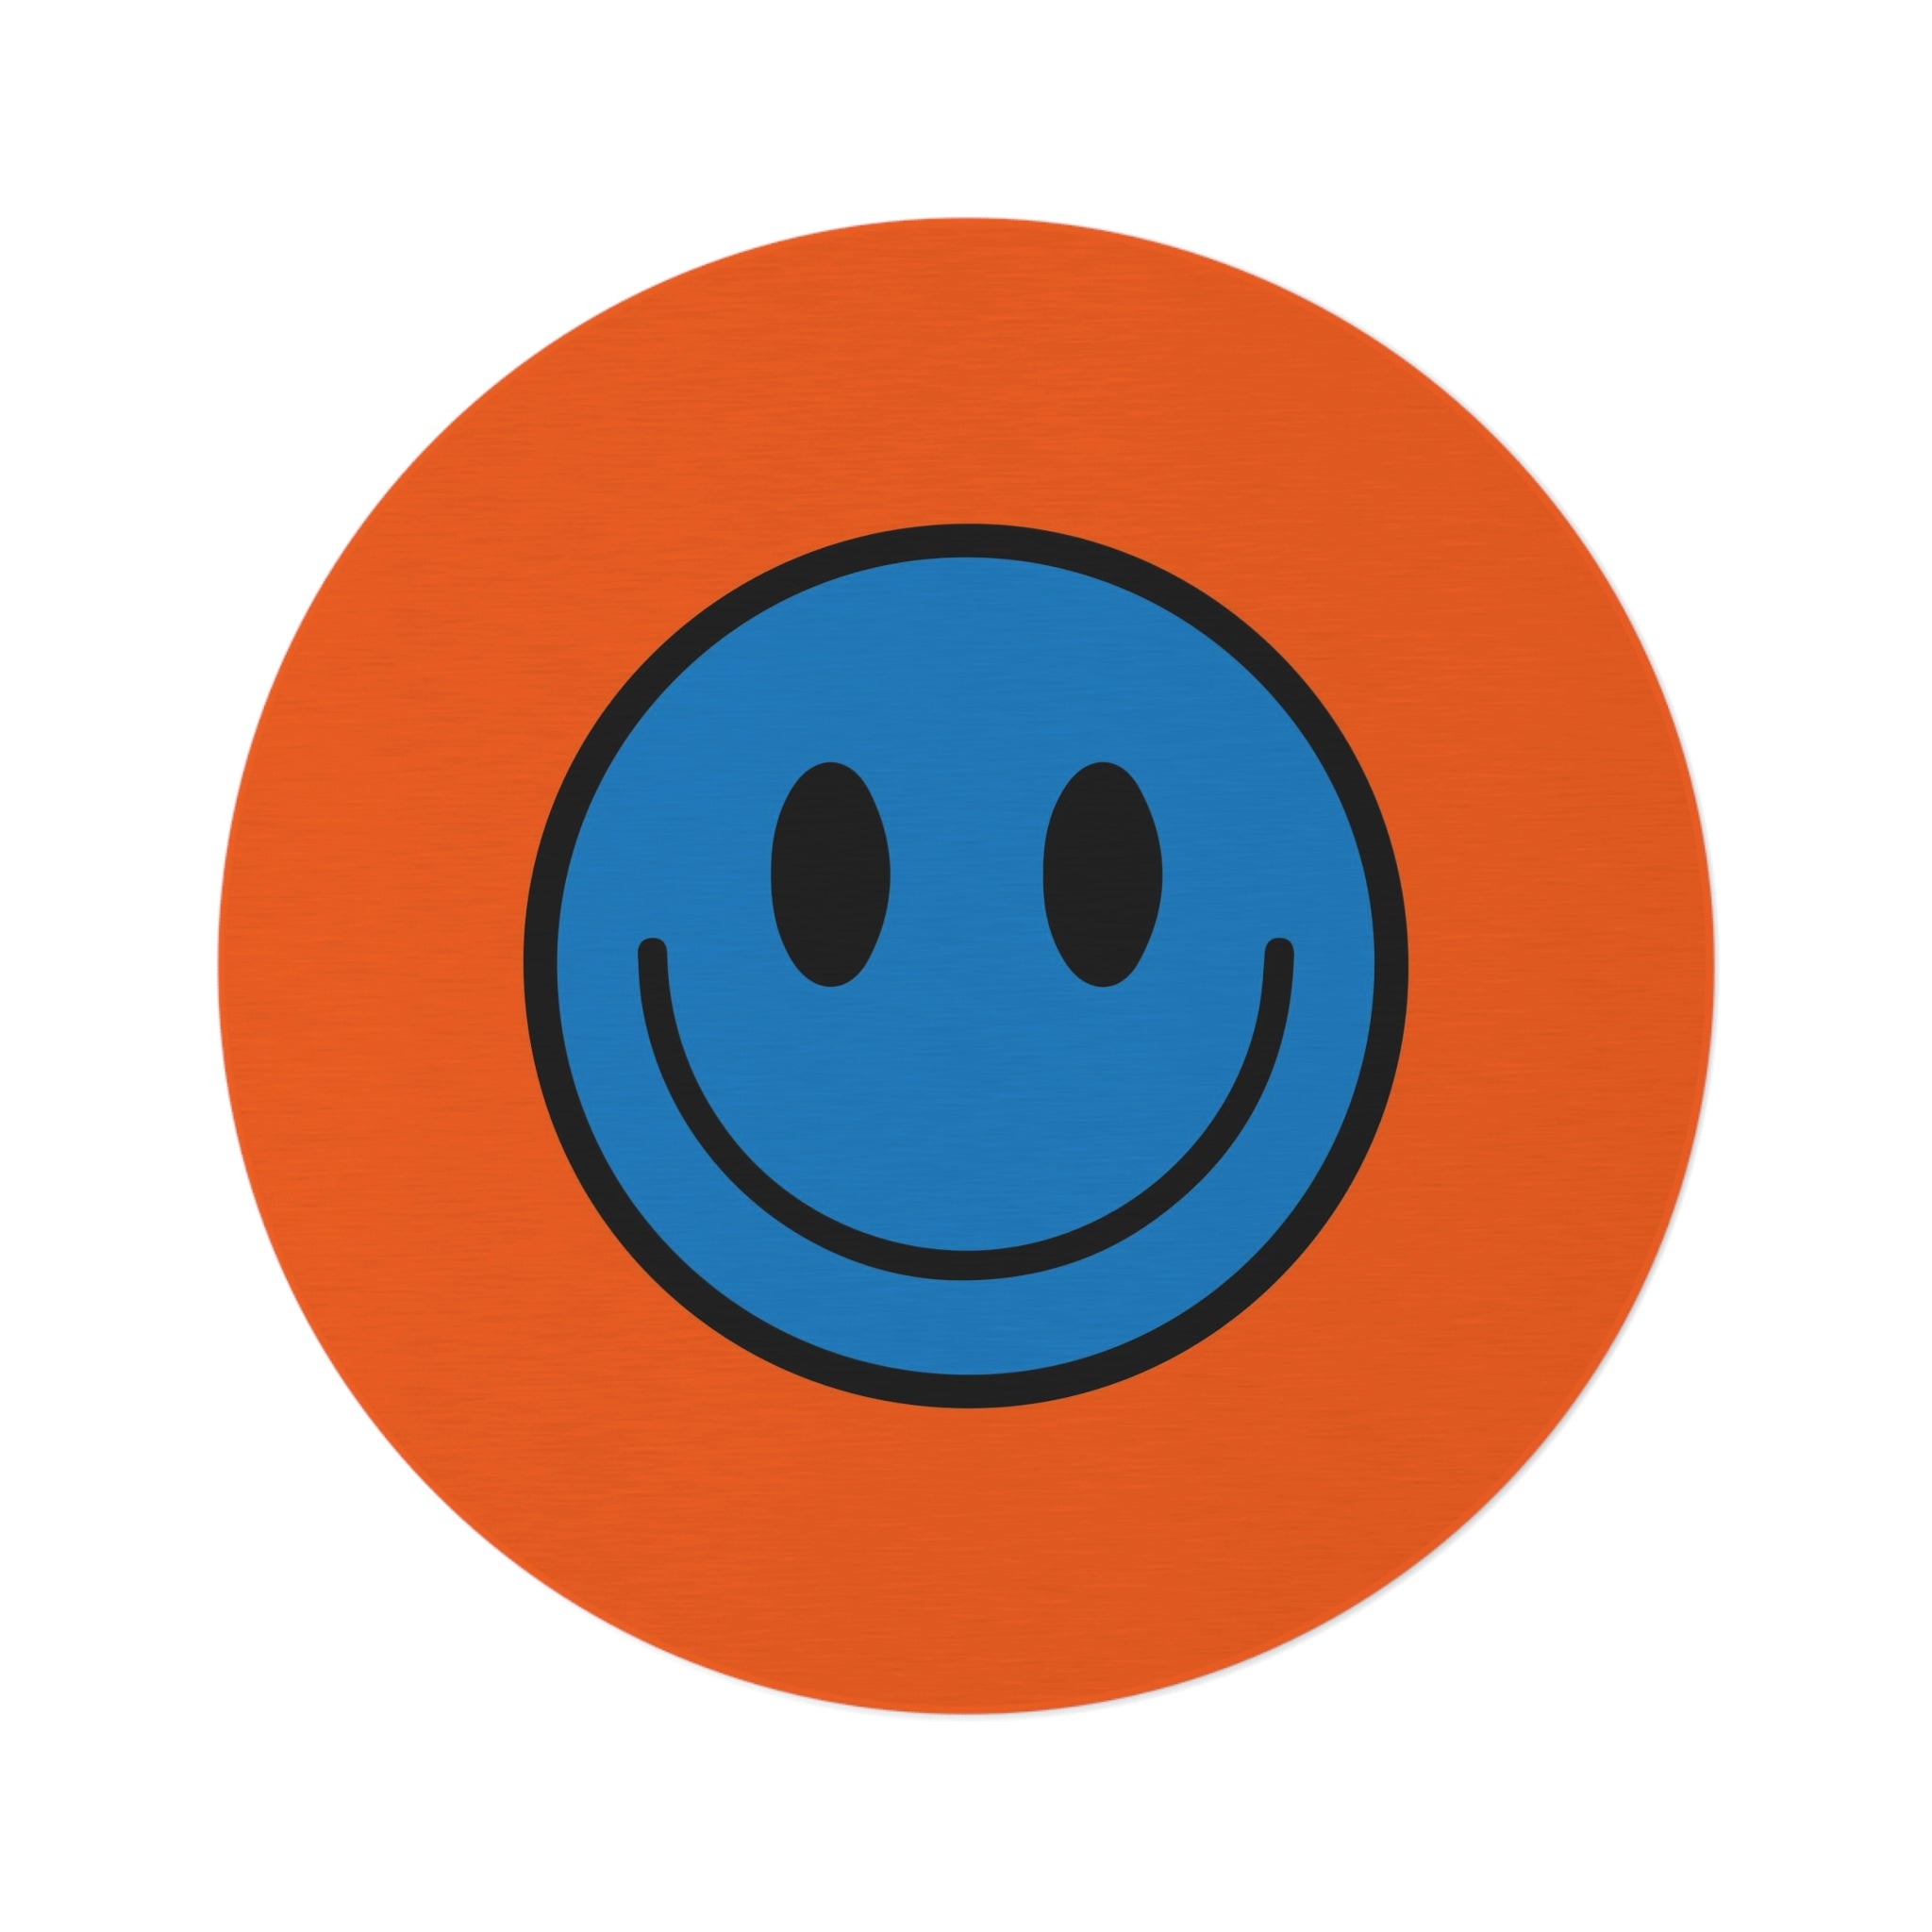 Runder Teppich Happy Face Muster blau/orange 